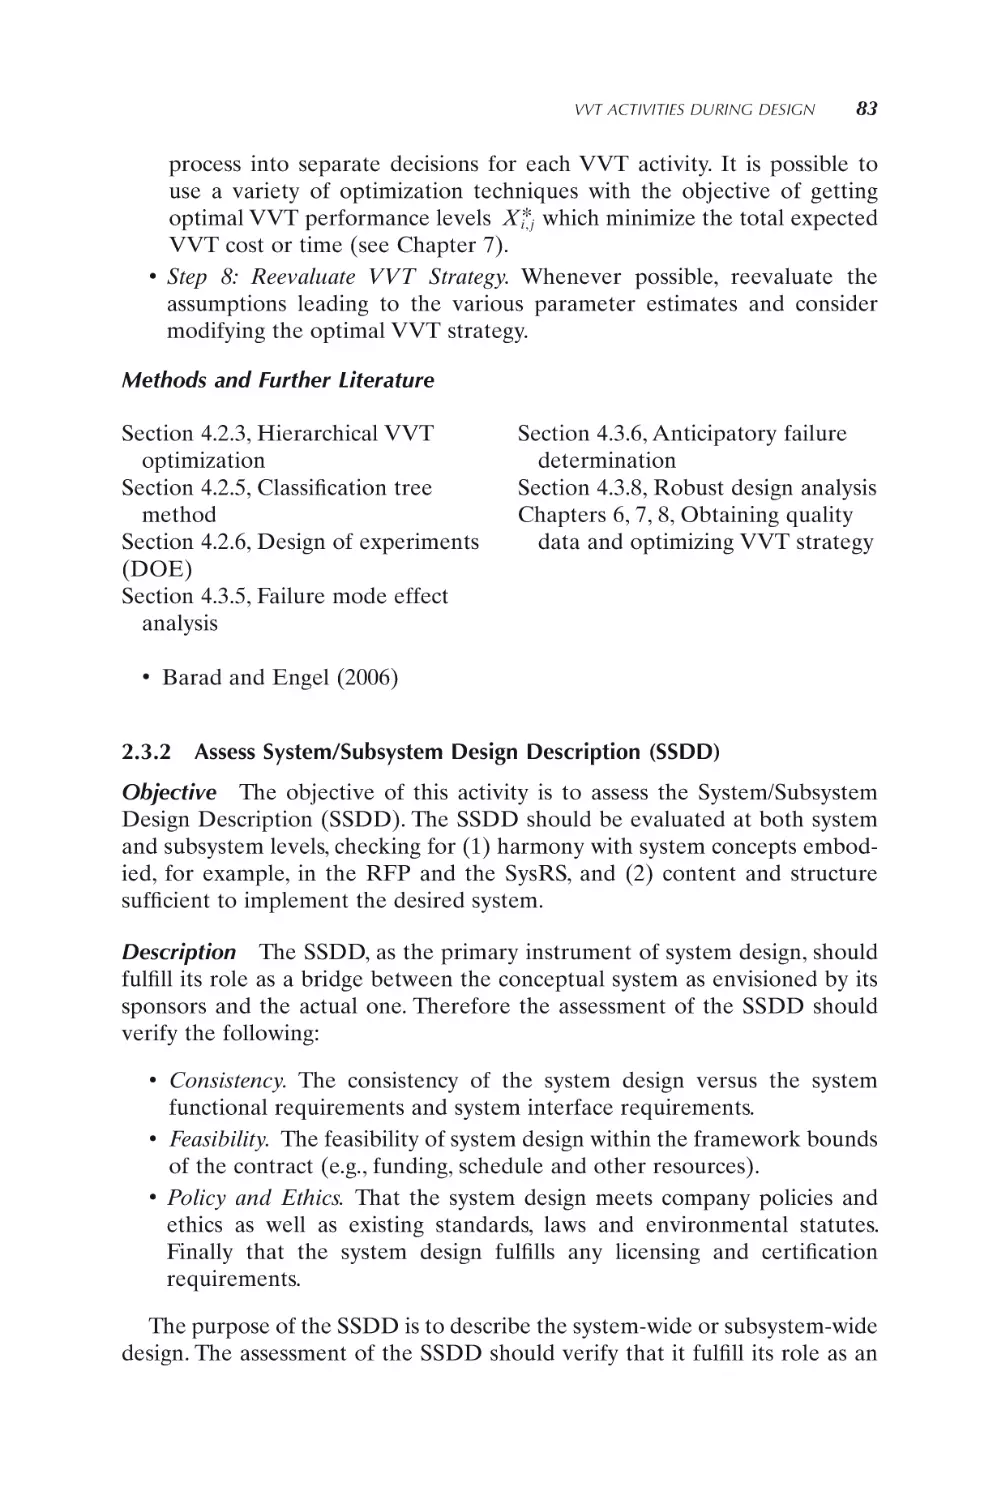 2.3.2 Assess System/Subsystem Design Description (SSDD)